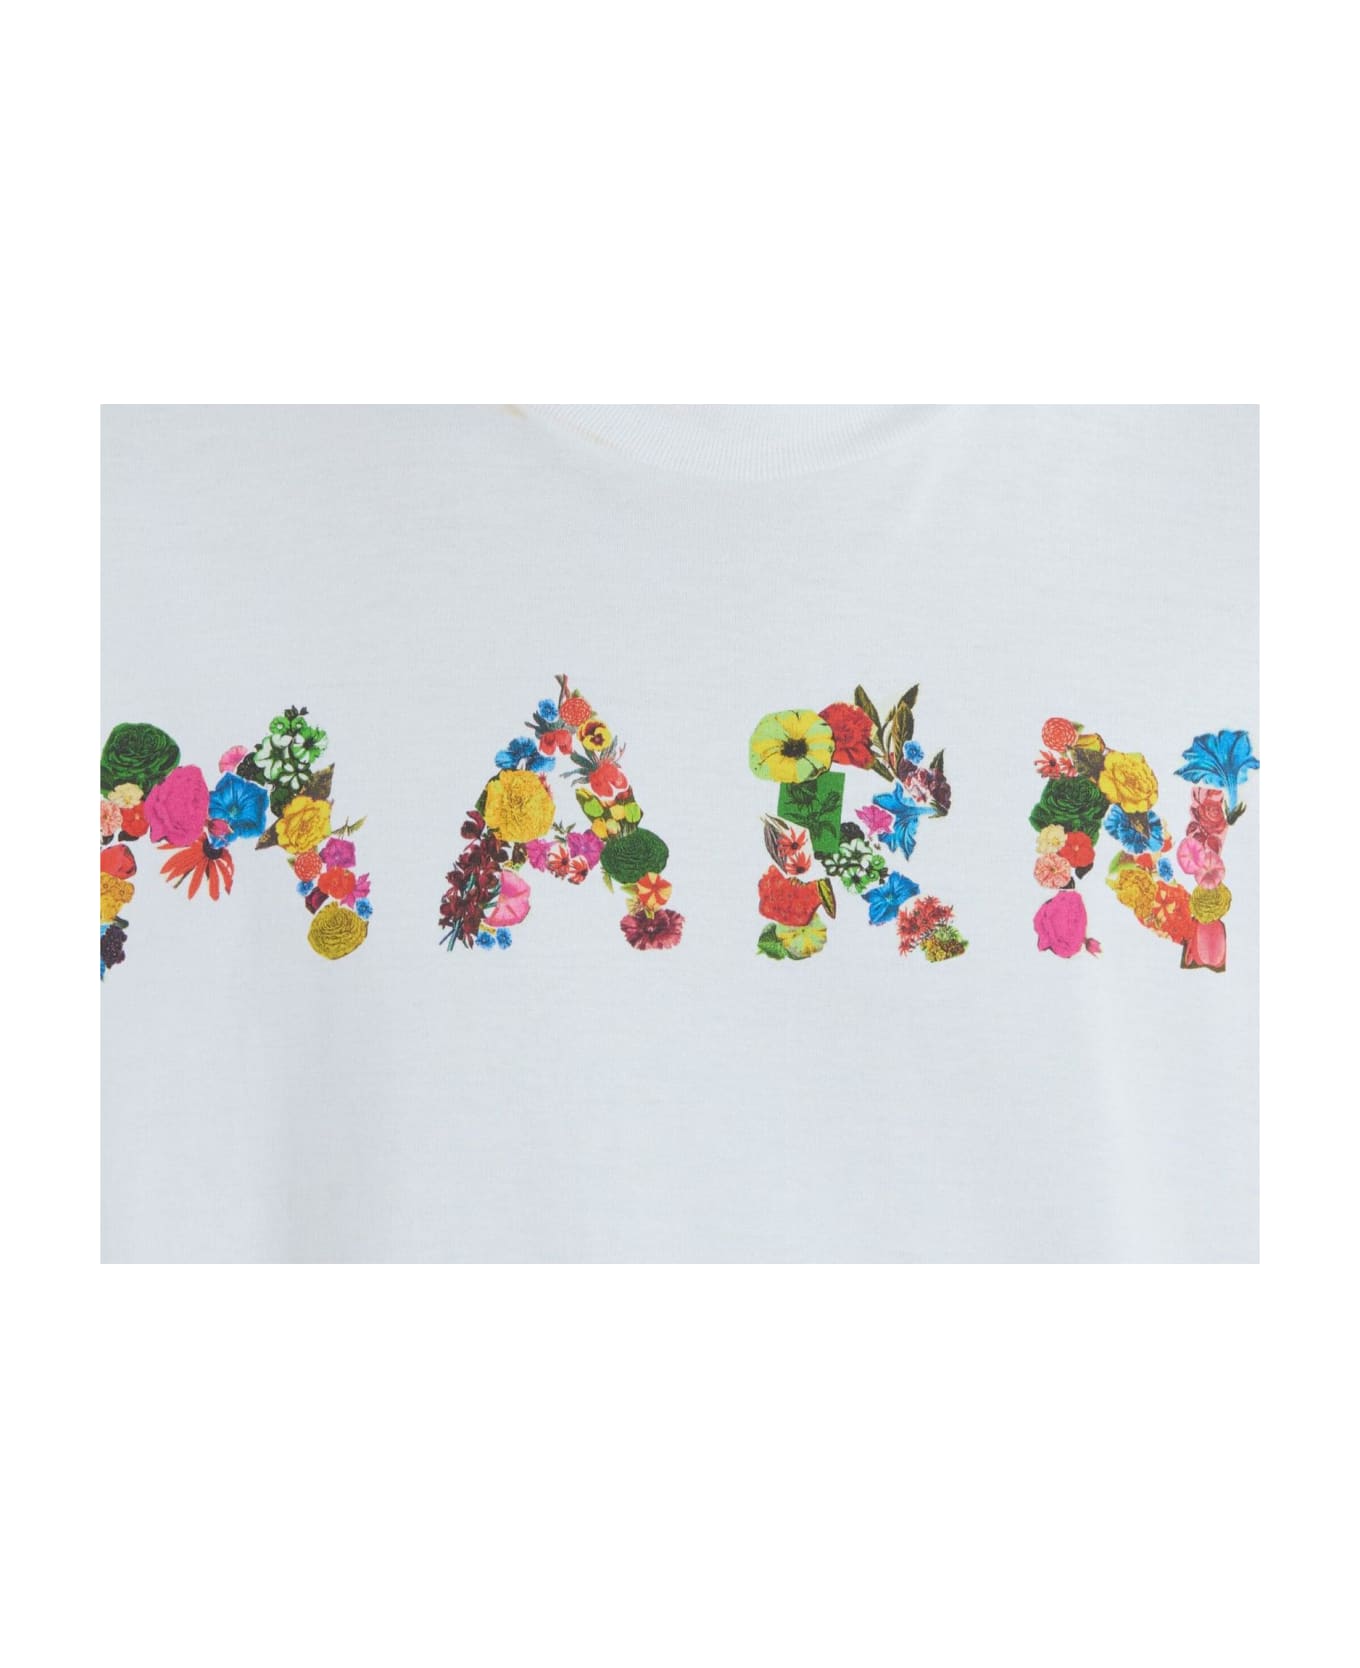 Marni T-shirt - Lily White シャツ